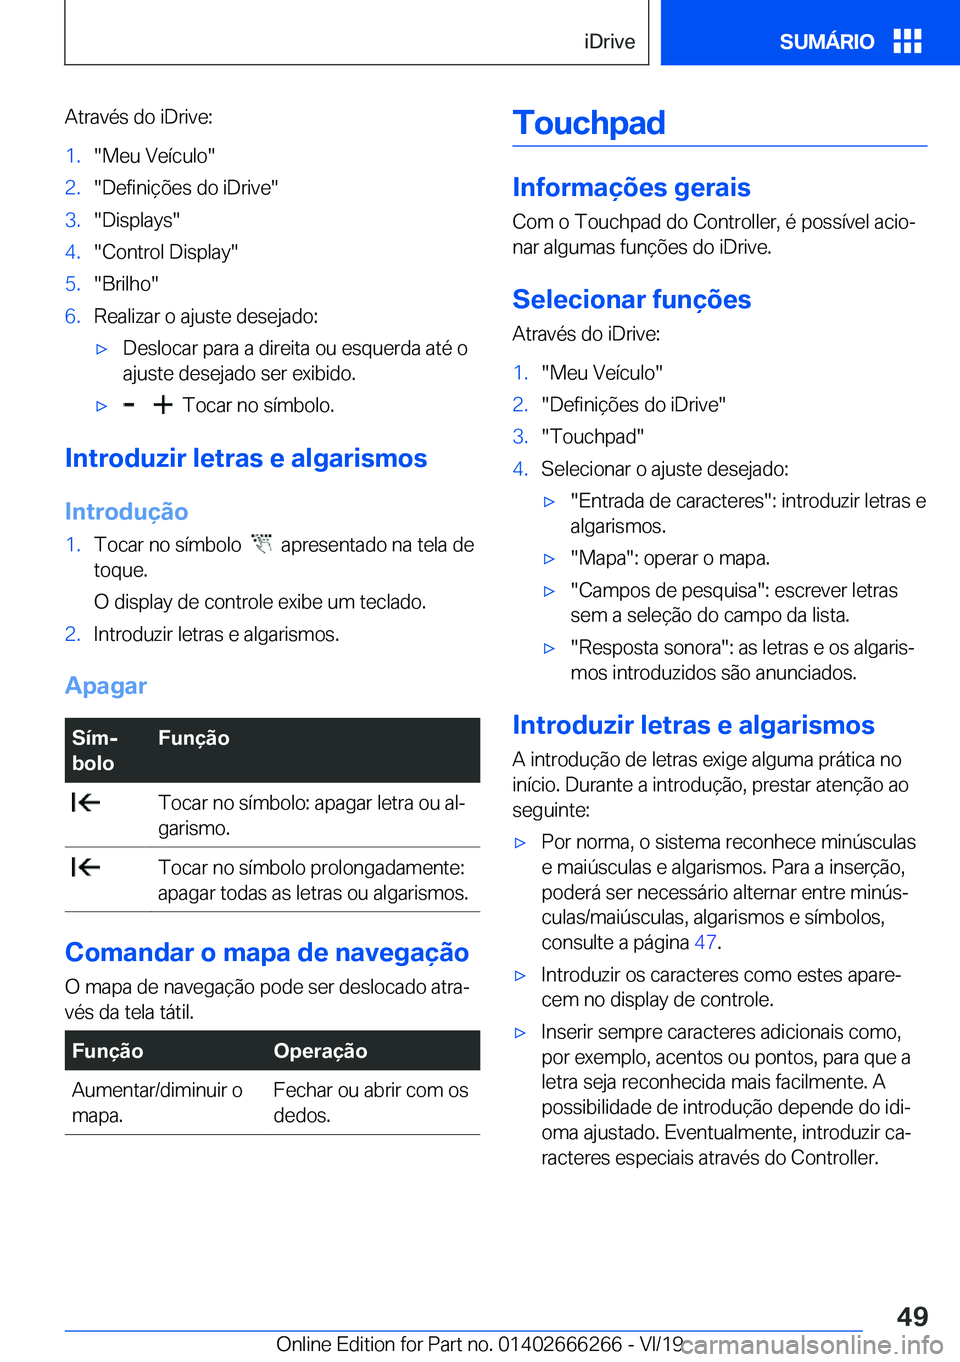 BMW 2 SERIES COUPE 2020  Manual do condutor (in Portuguese) �A�t�r�a�v�é�s��d�o��i�D�r�i�v�e�:�1�.��M�e�u��V�e�